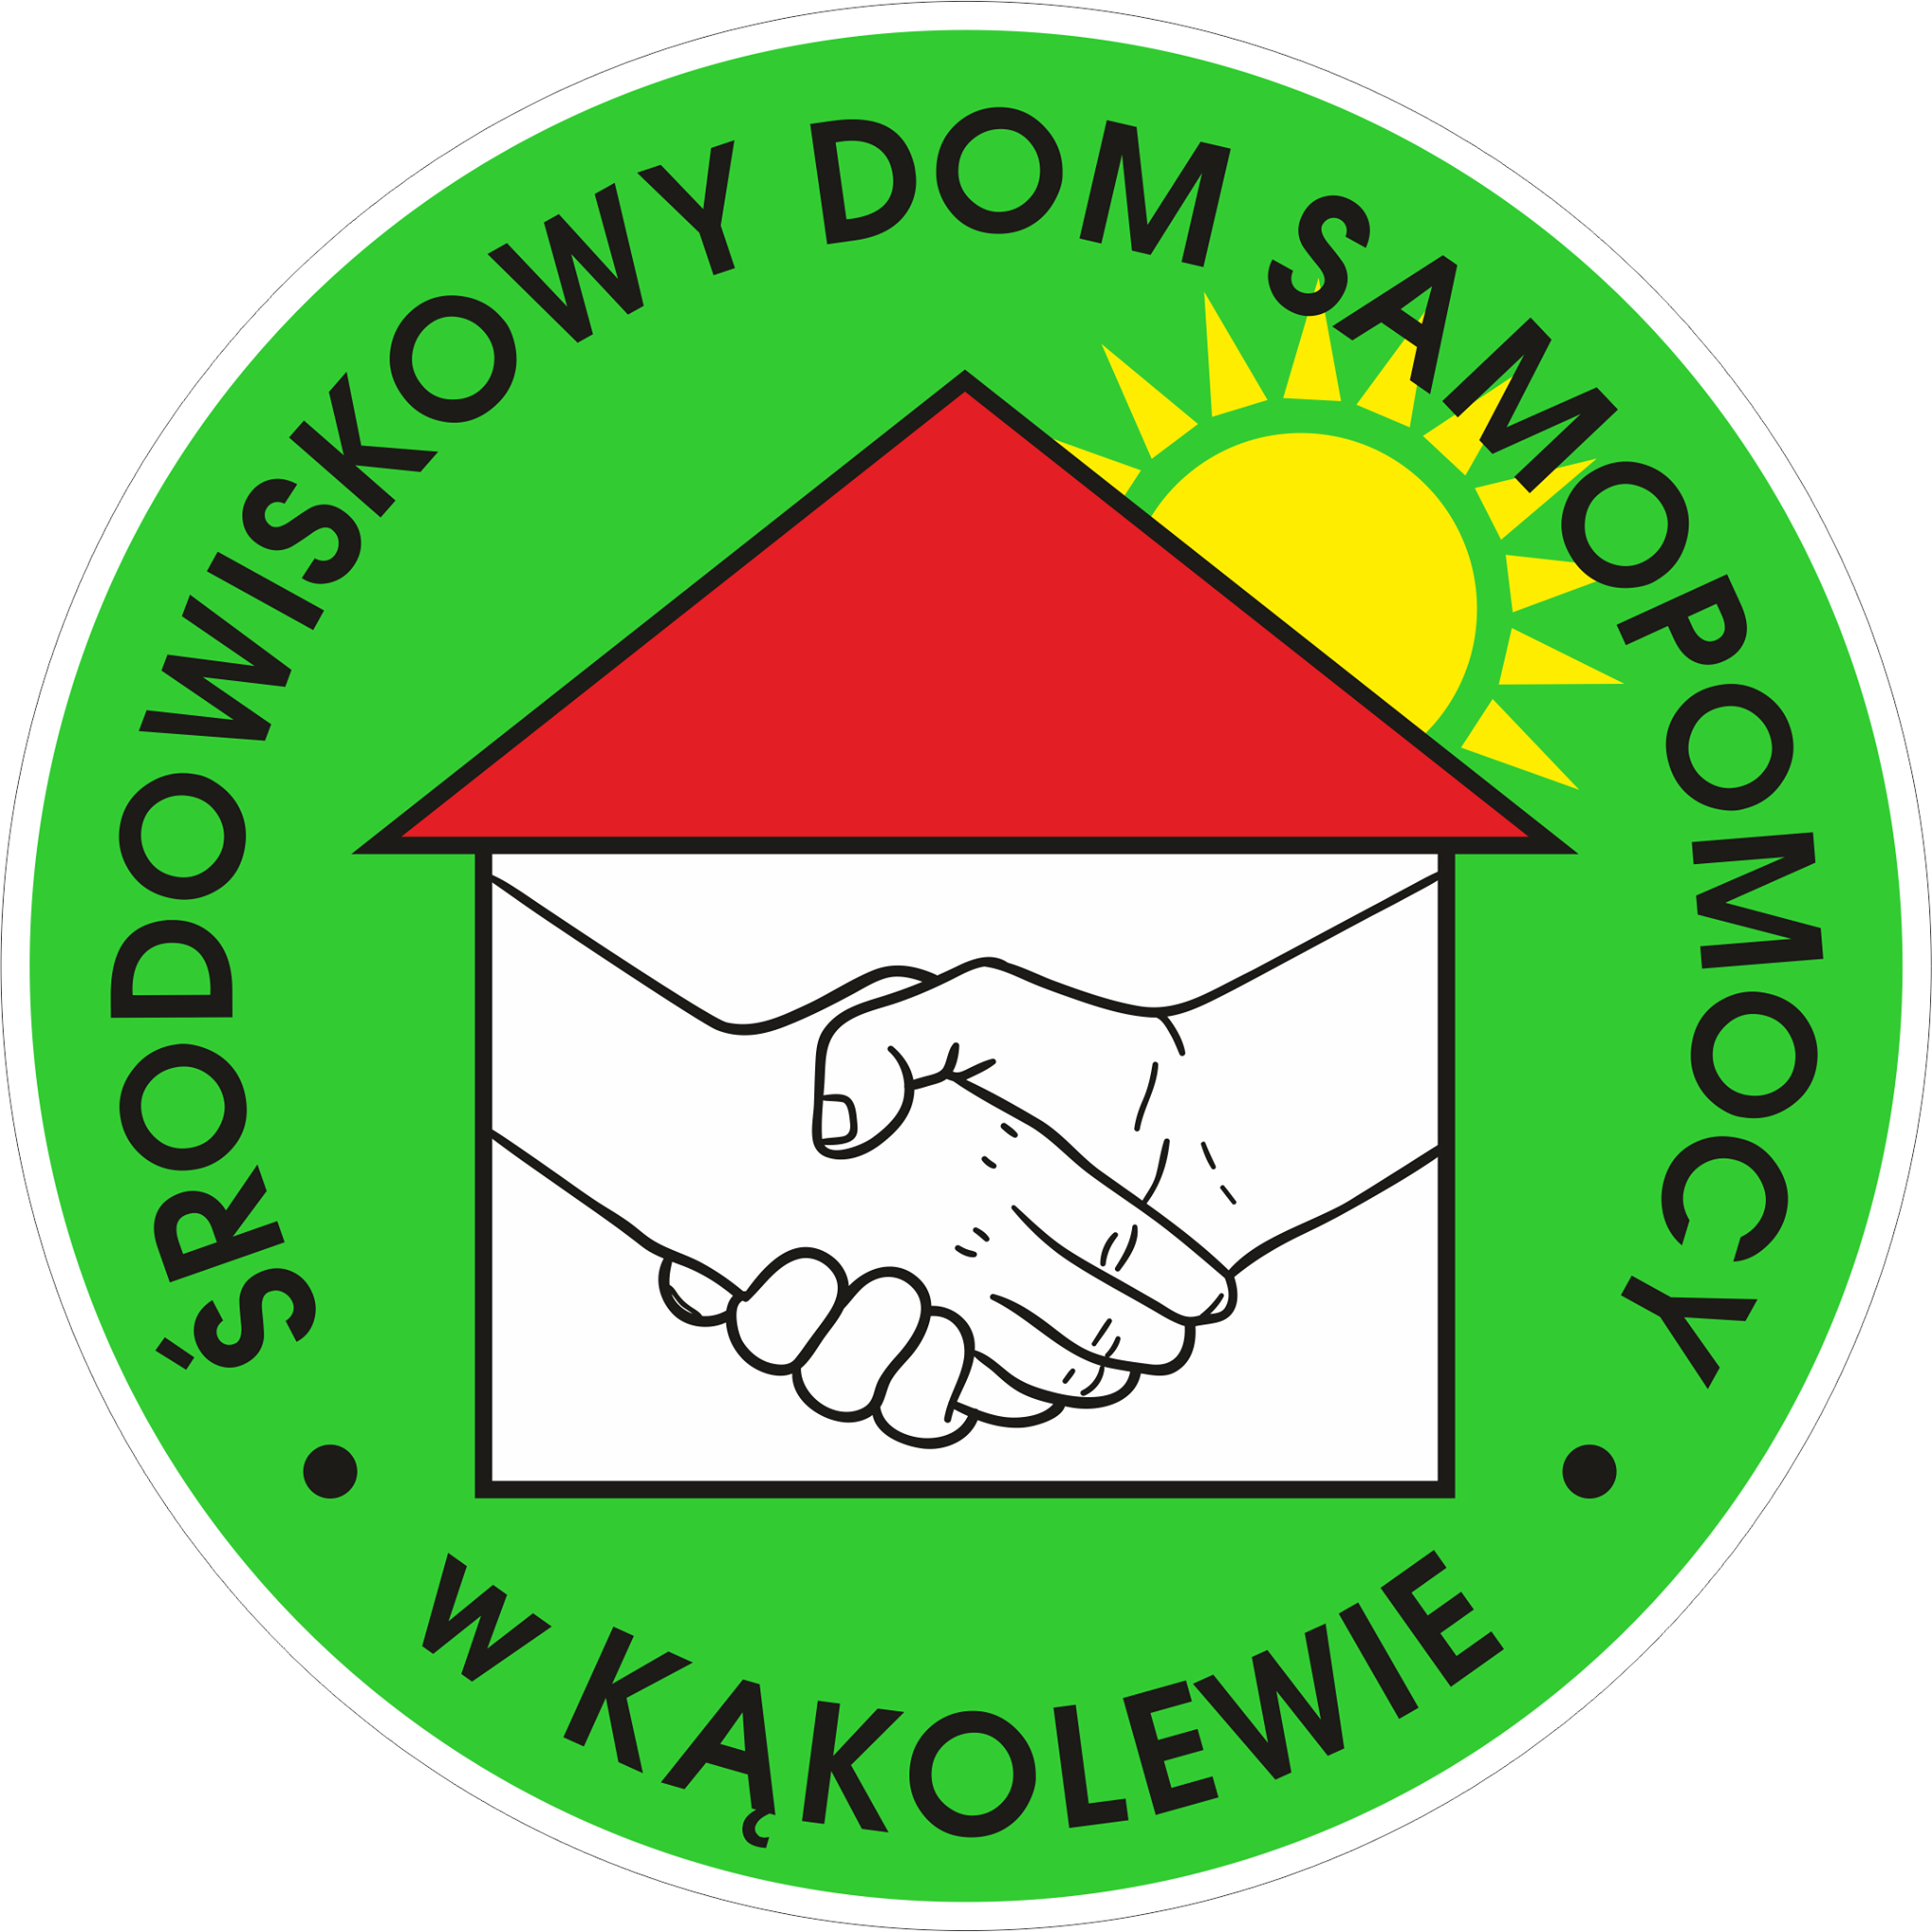 SDS Kakolewo logo 2020